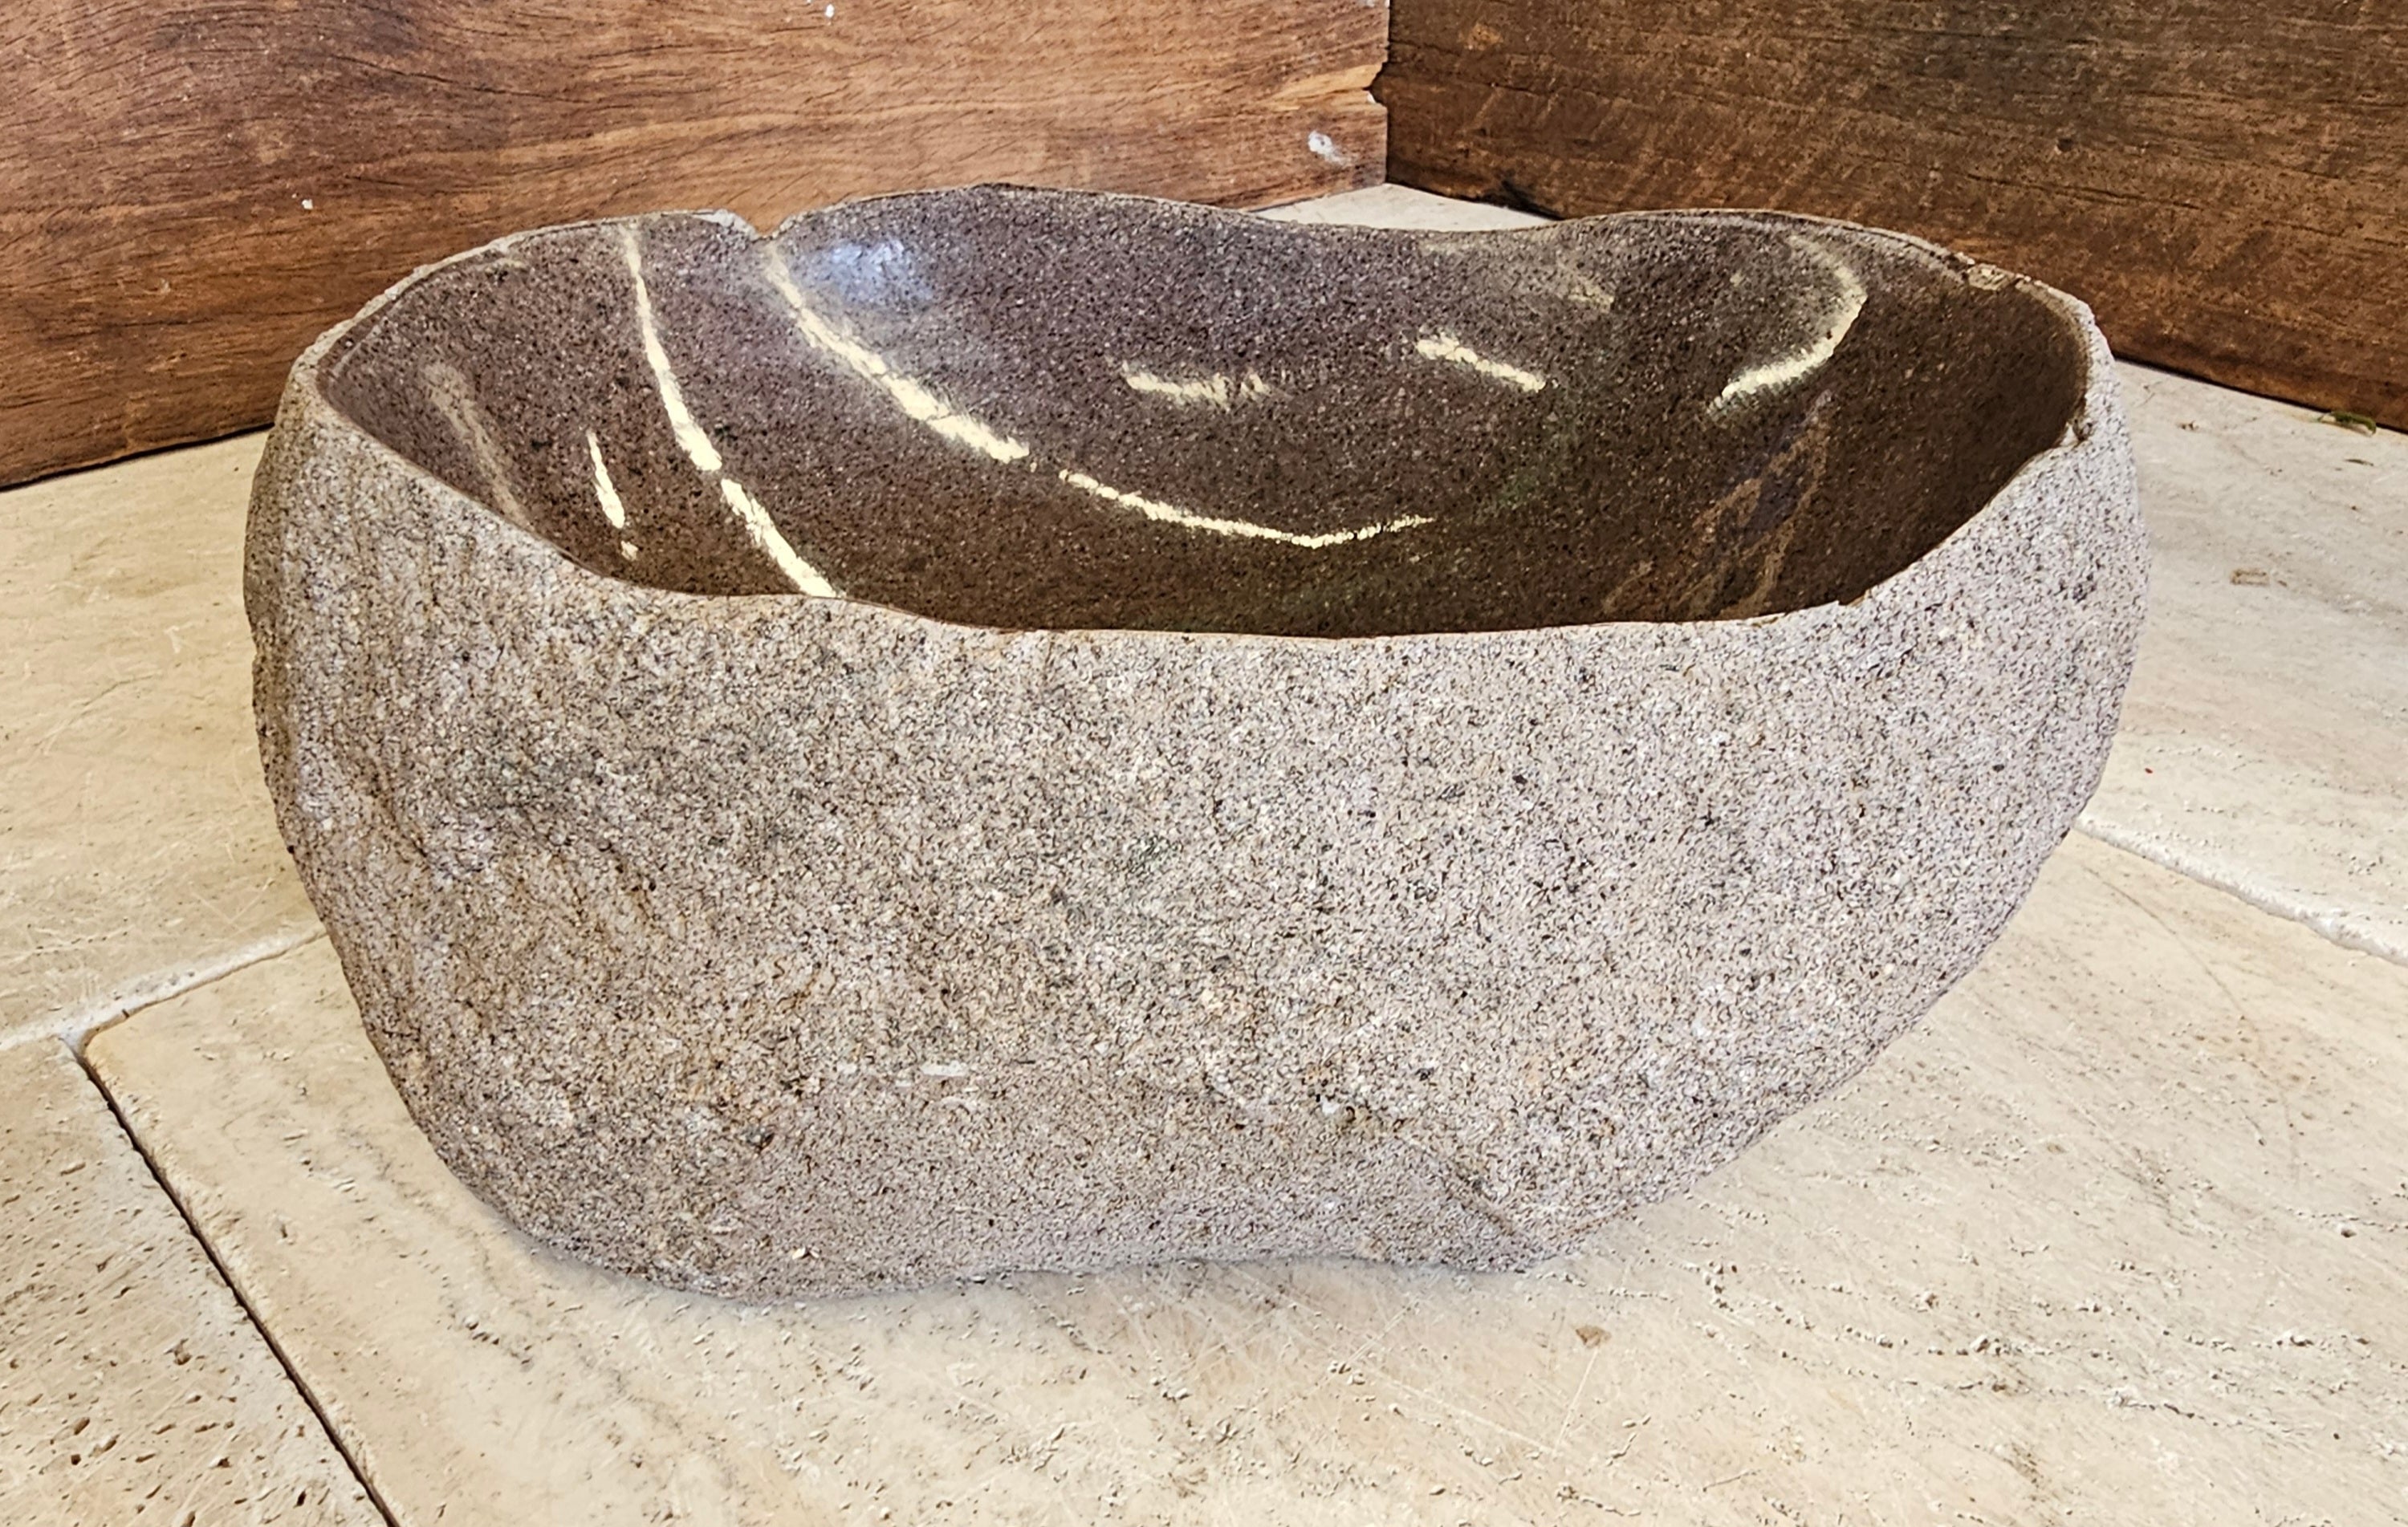 Handmade Natural Oval River Stone Bathroom Basin - RVS2306010